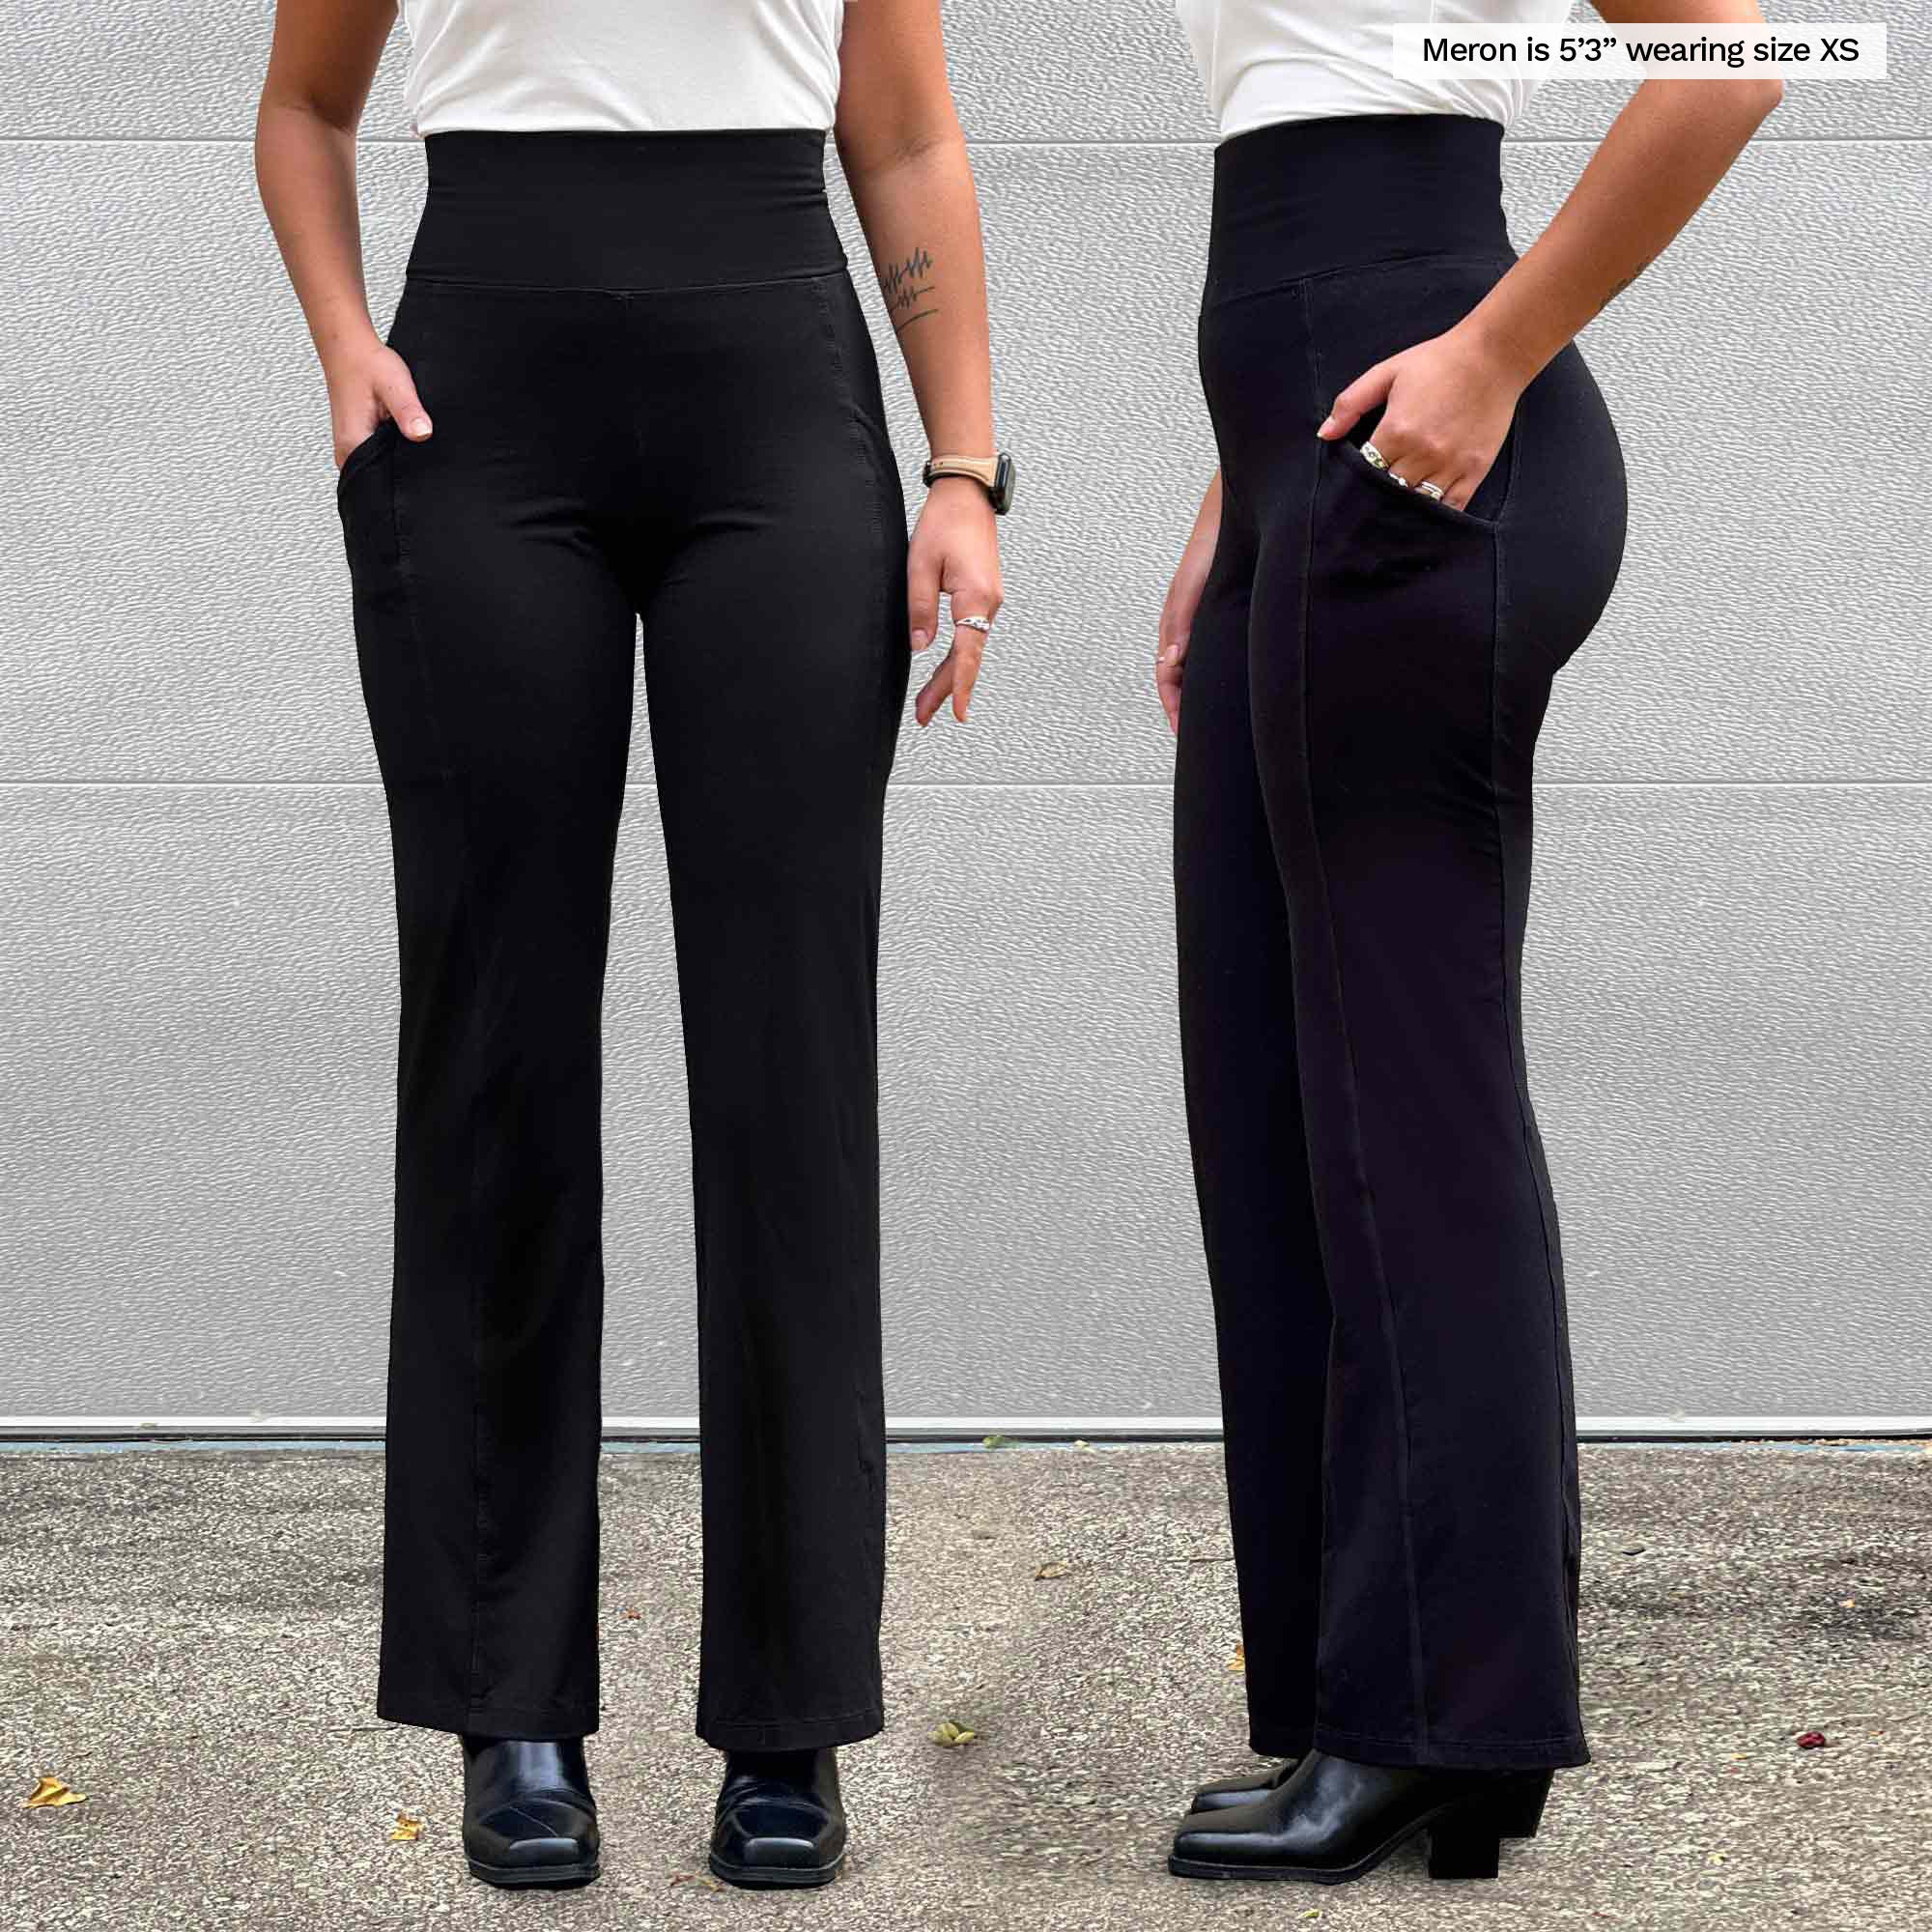 GetUSCart- SYRINX High Waist Yoga Pants with Pockets for Women